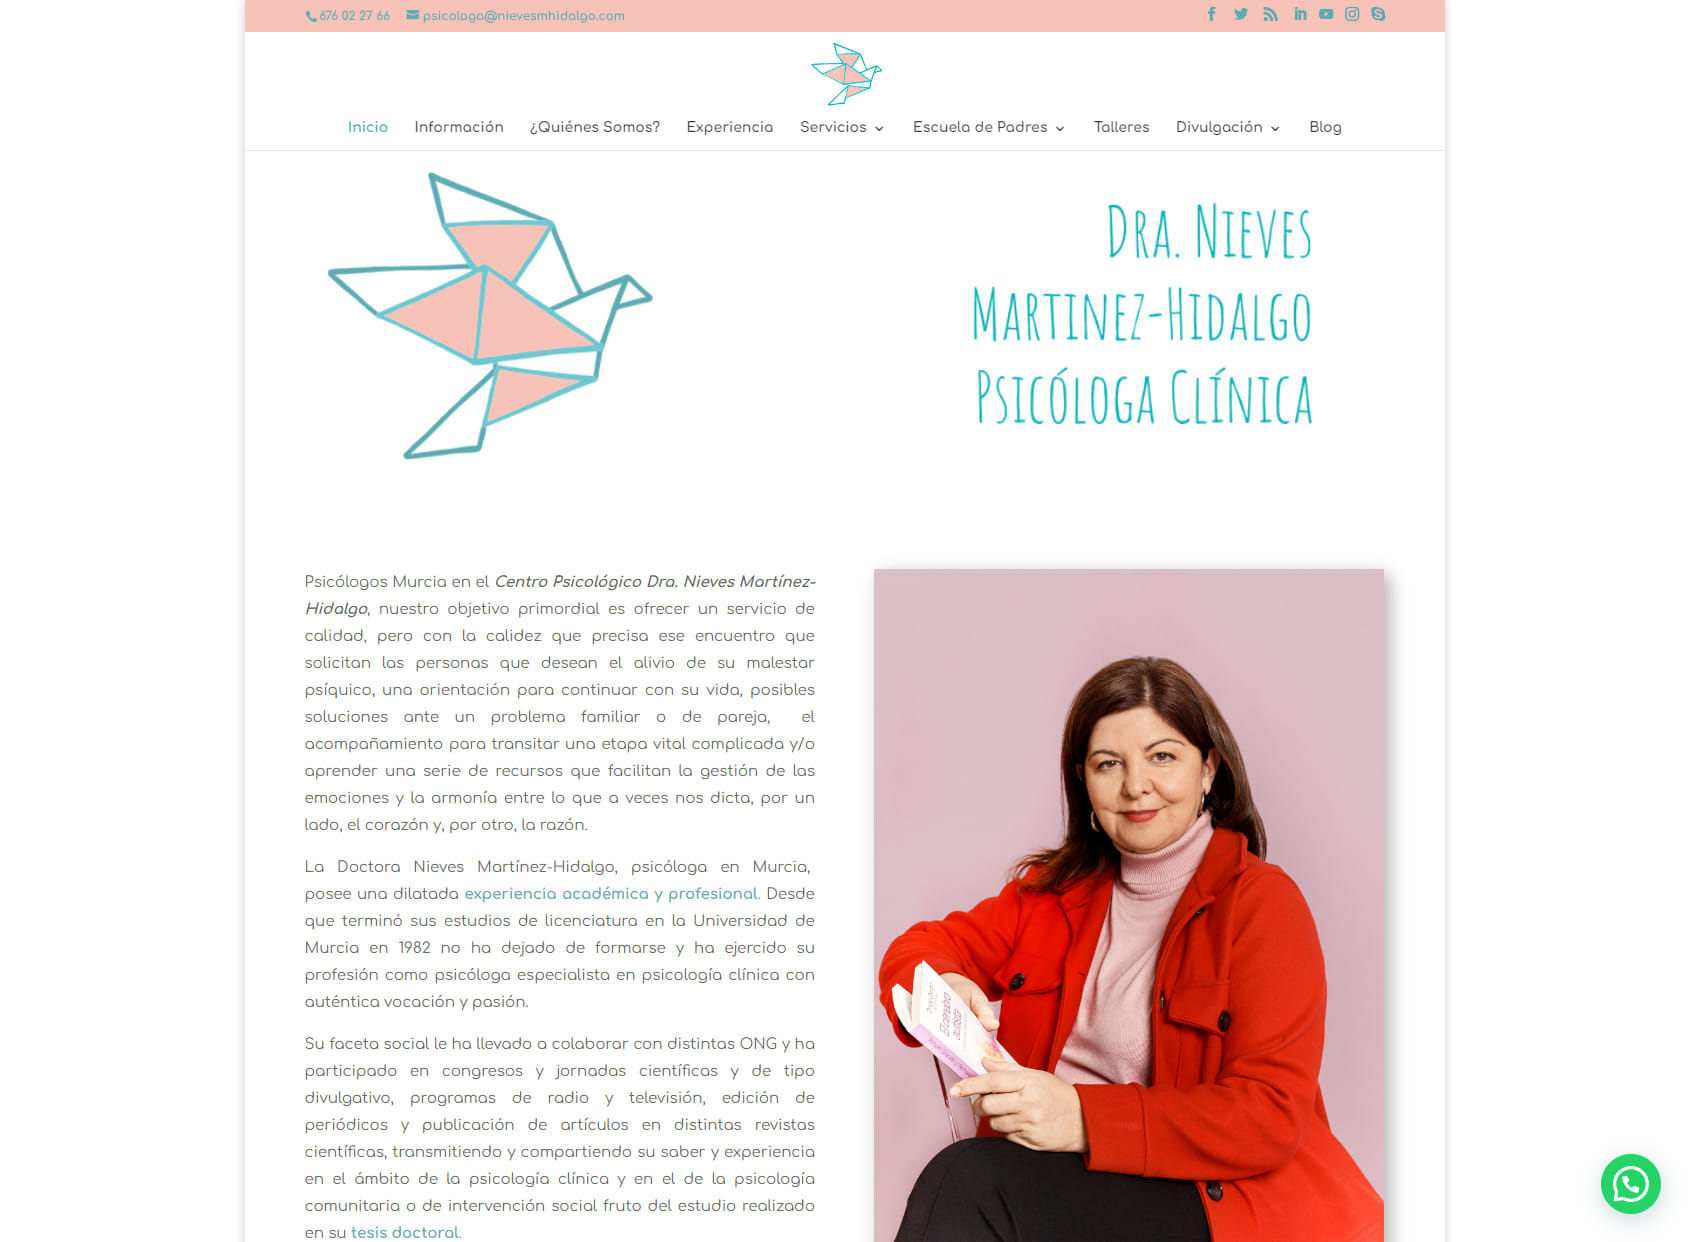 Dra. Nieves Martínez-Hidalgo